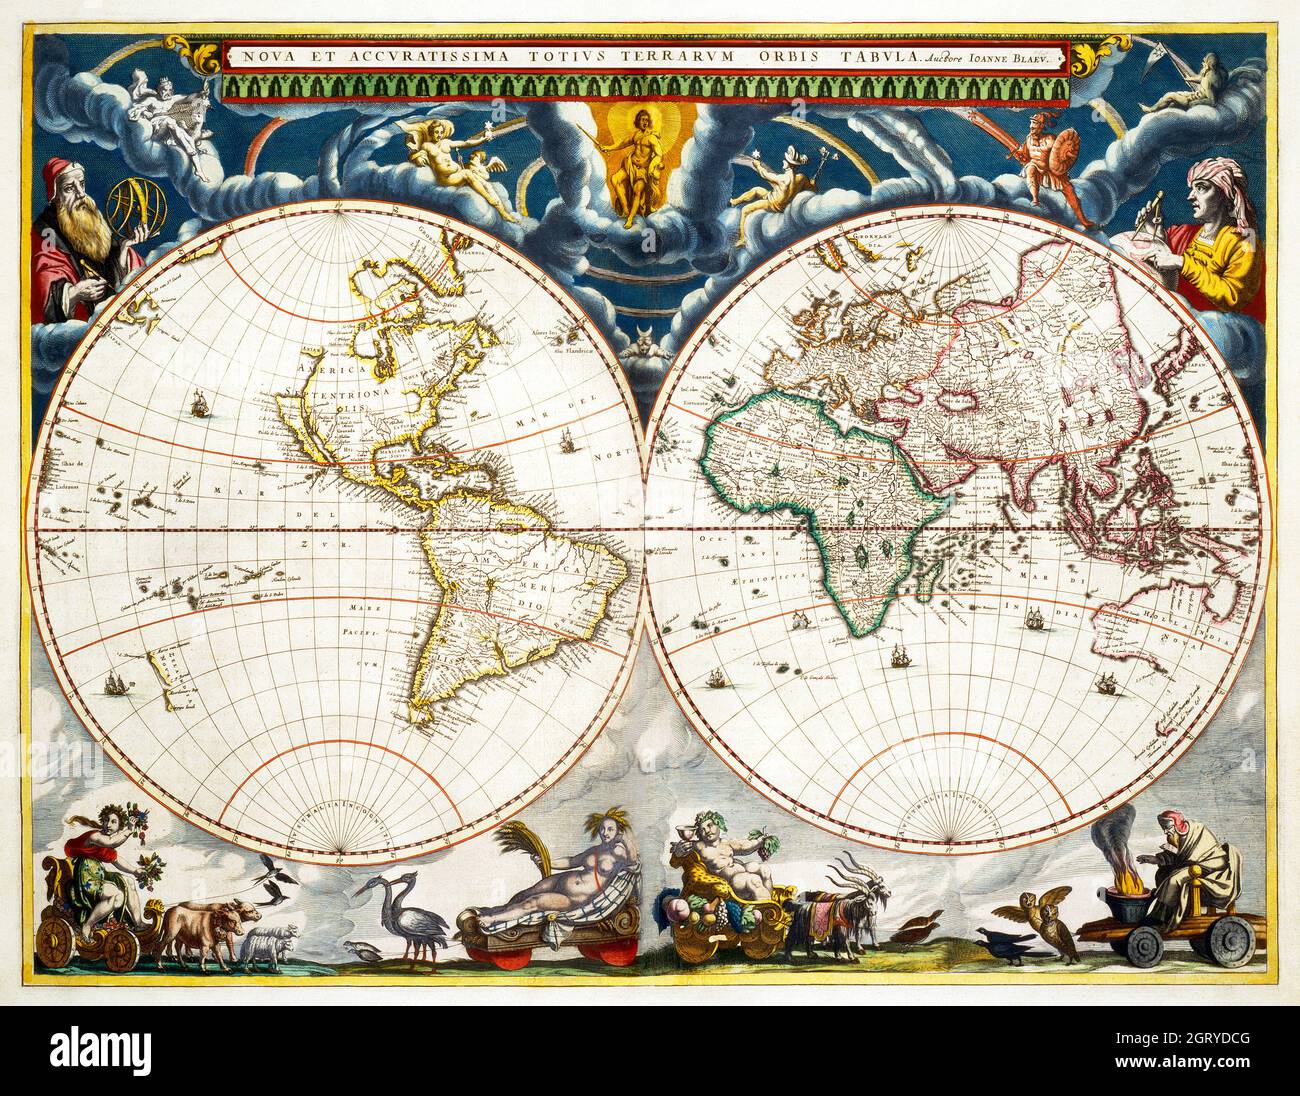 Nova et accuratissima totius terrarum orbis tabula (ca. 1648-1664) by Joan Blaeu. Map of the World. Stock Photo